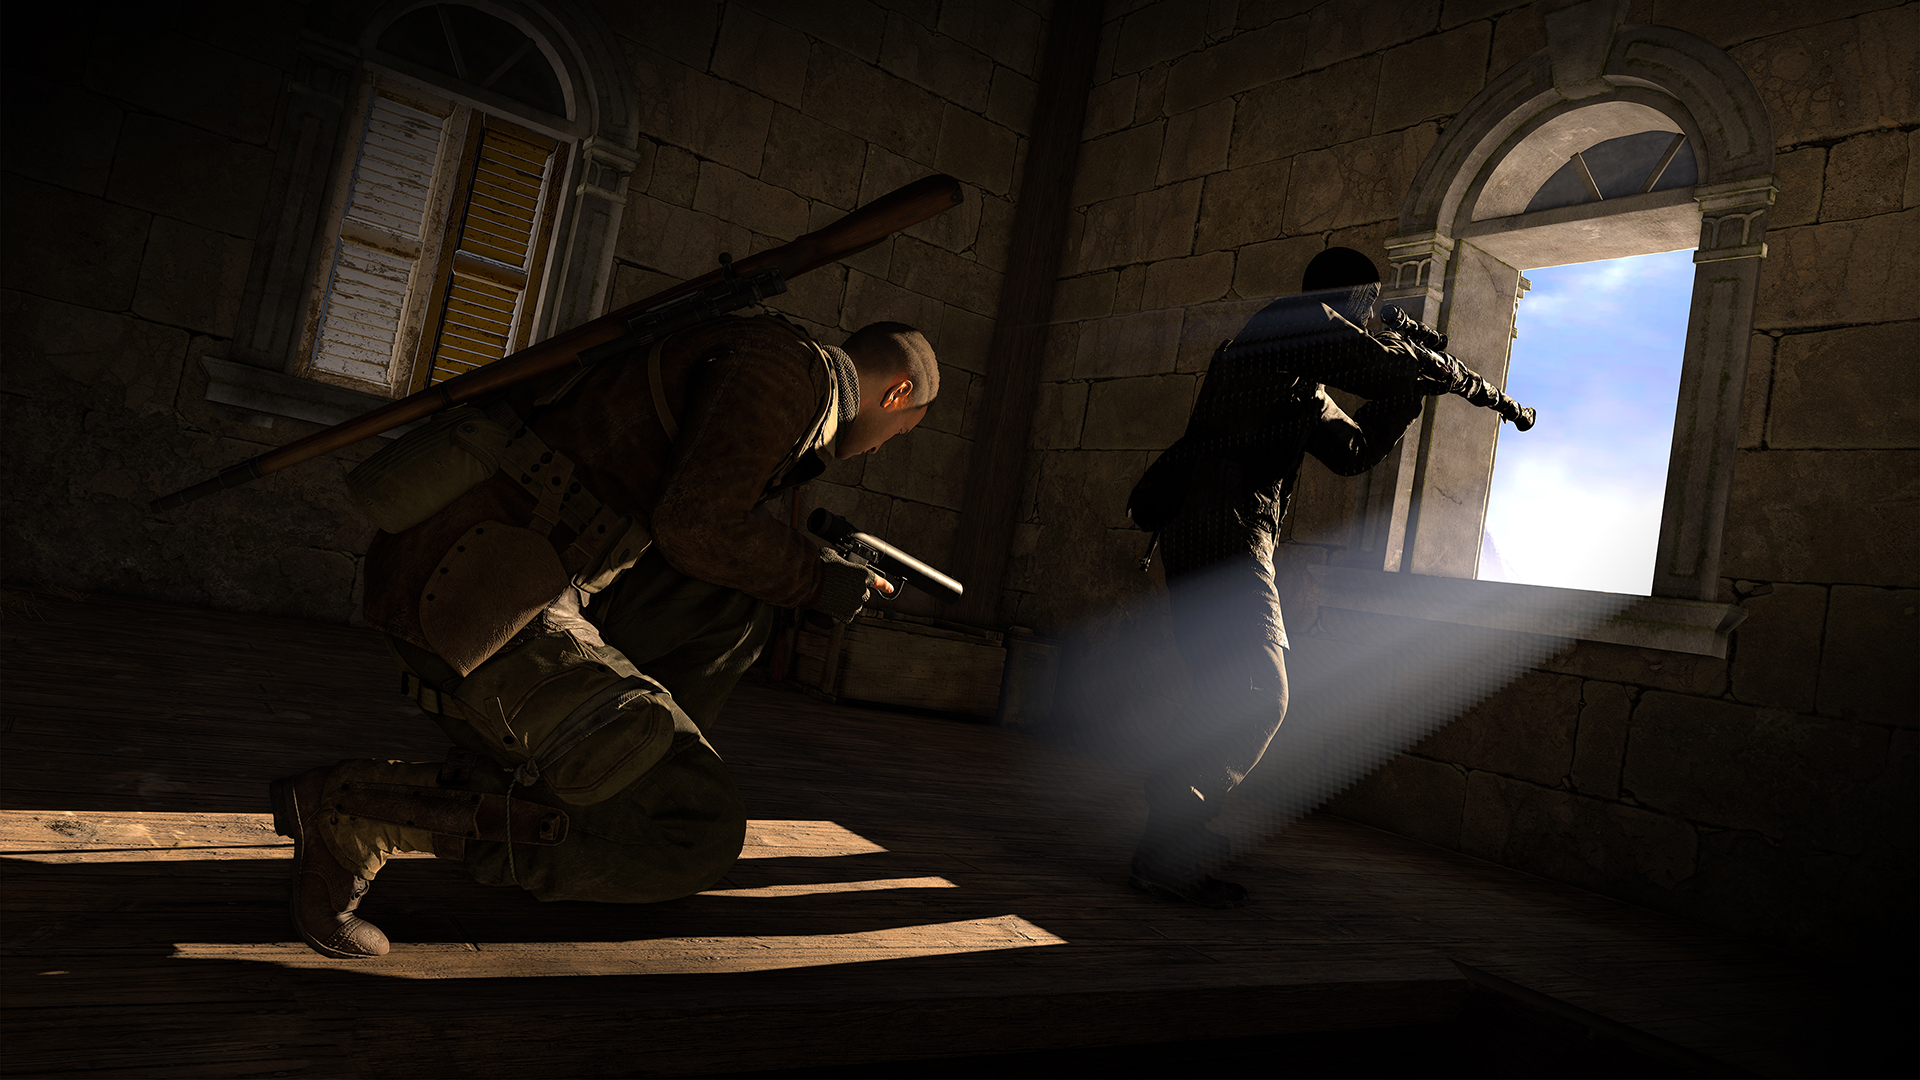 [$ 5.64] Sniper Elite 4 - Deathstorm Part 3: Obliteration DLC Steam CD Key